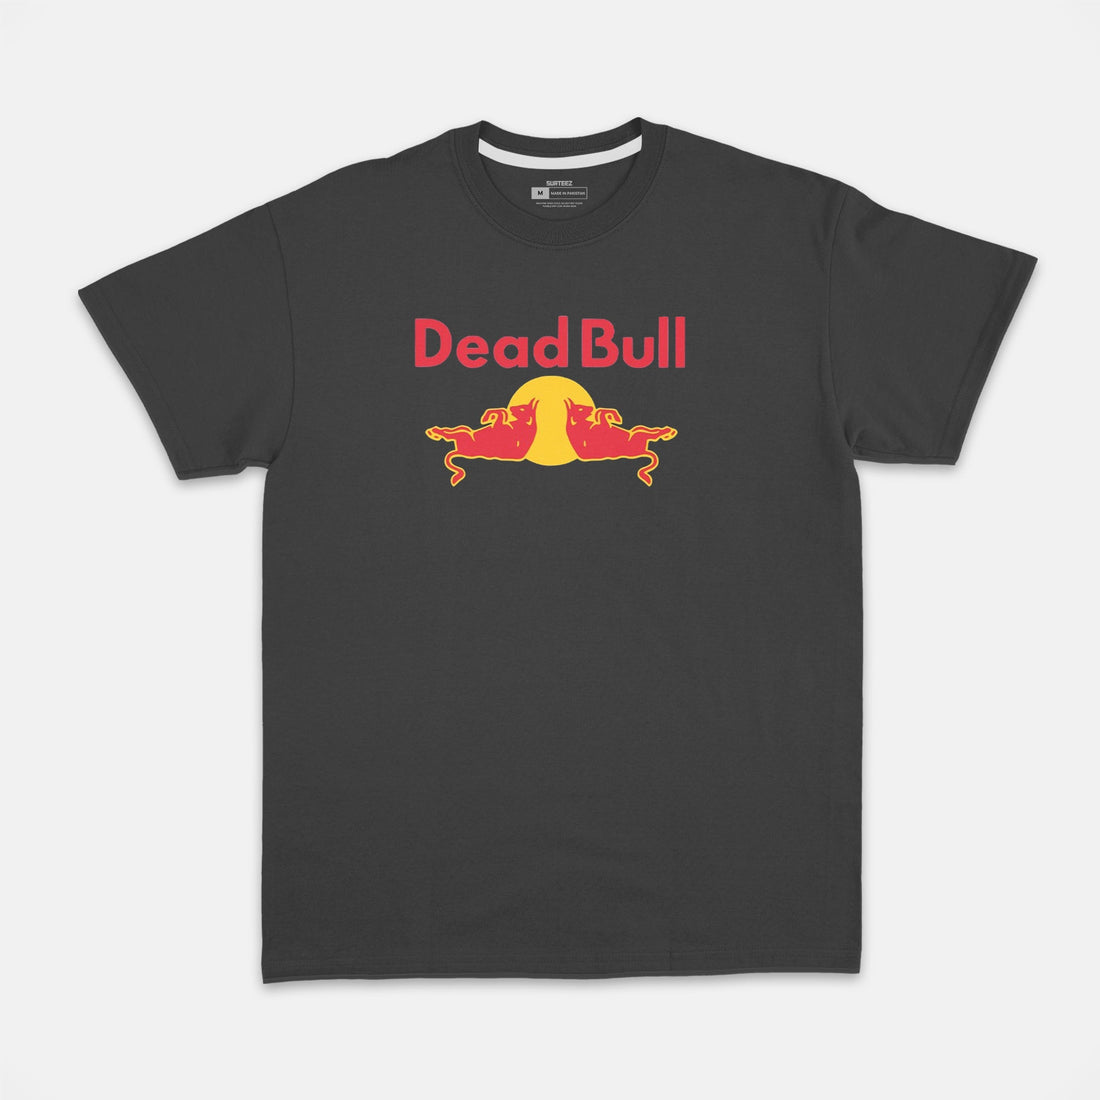 DeadBull Graphic Tshirt